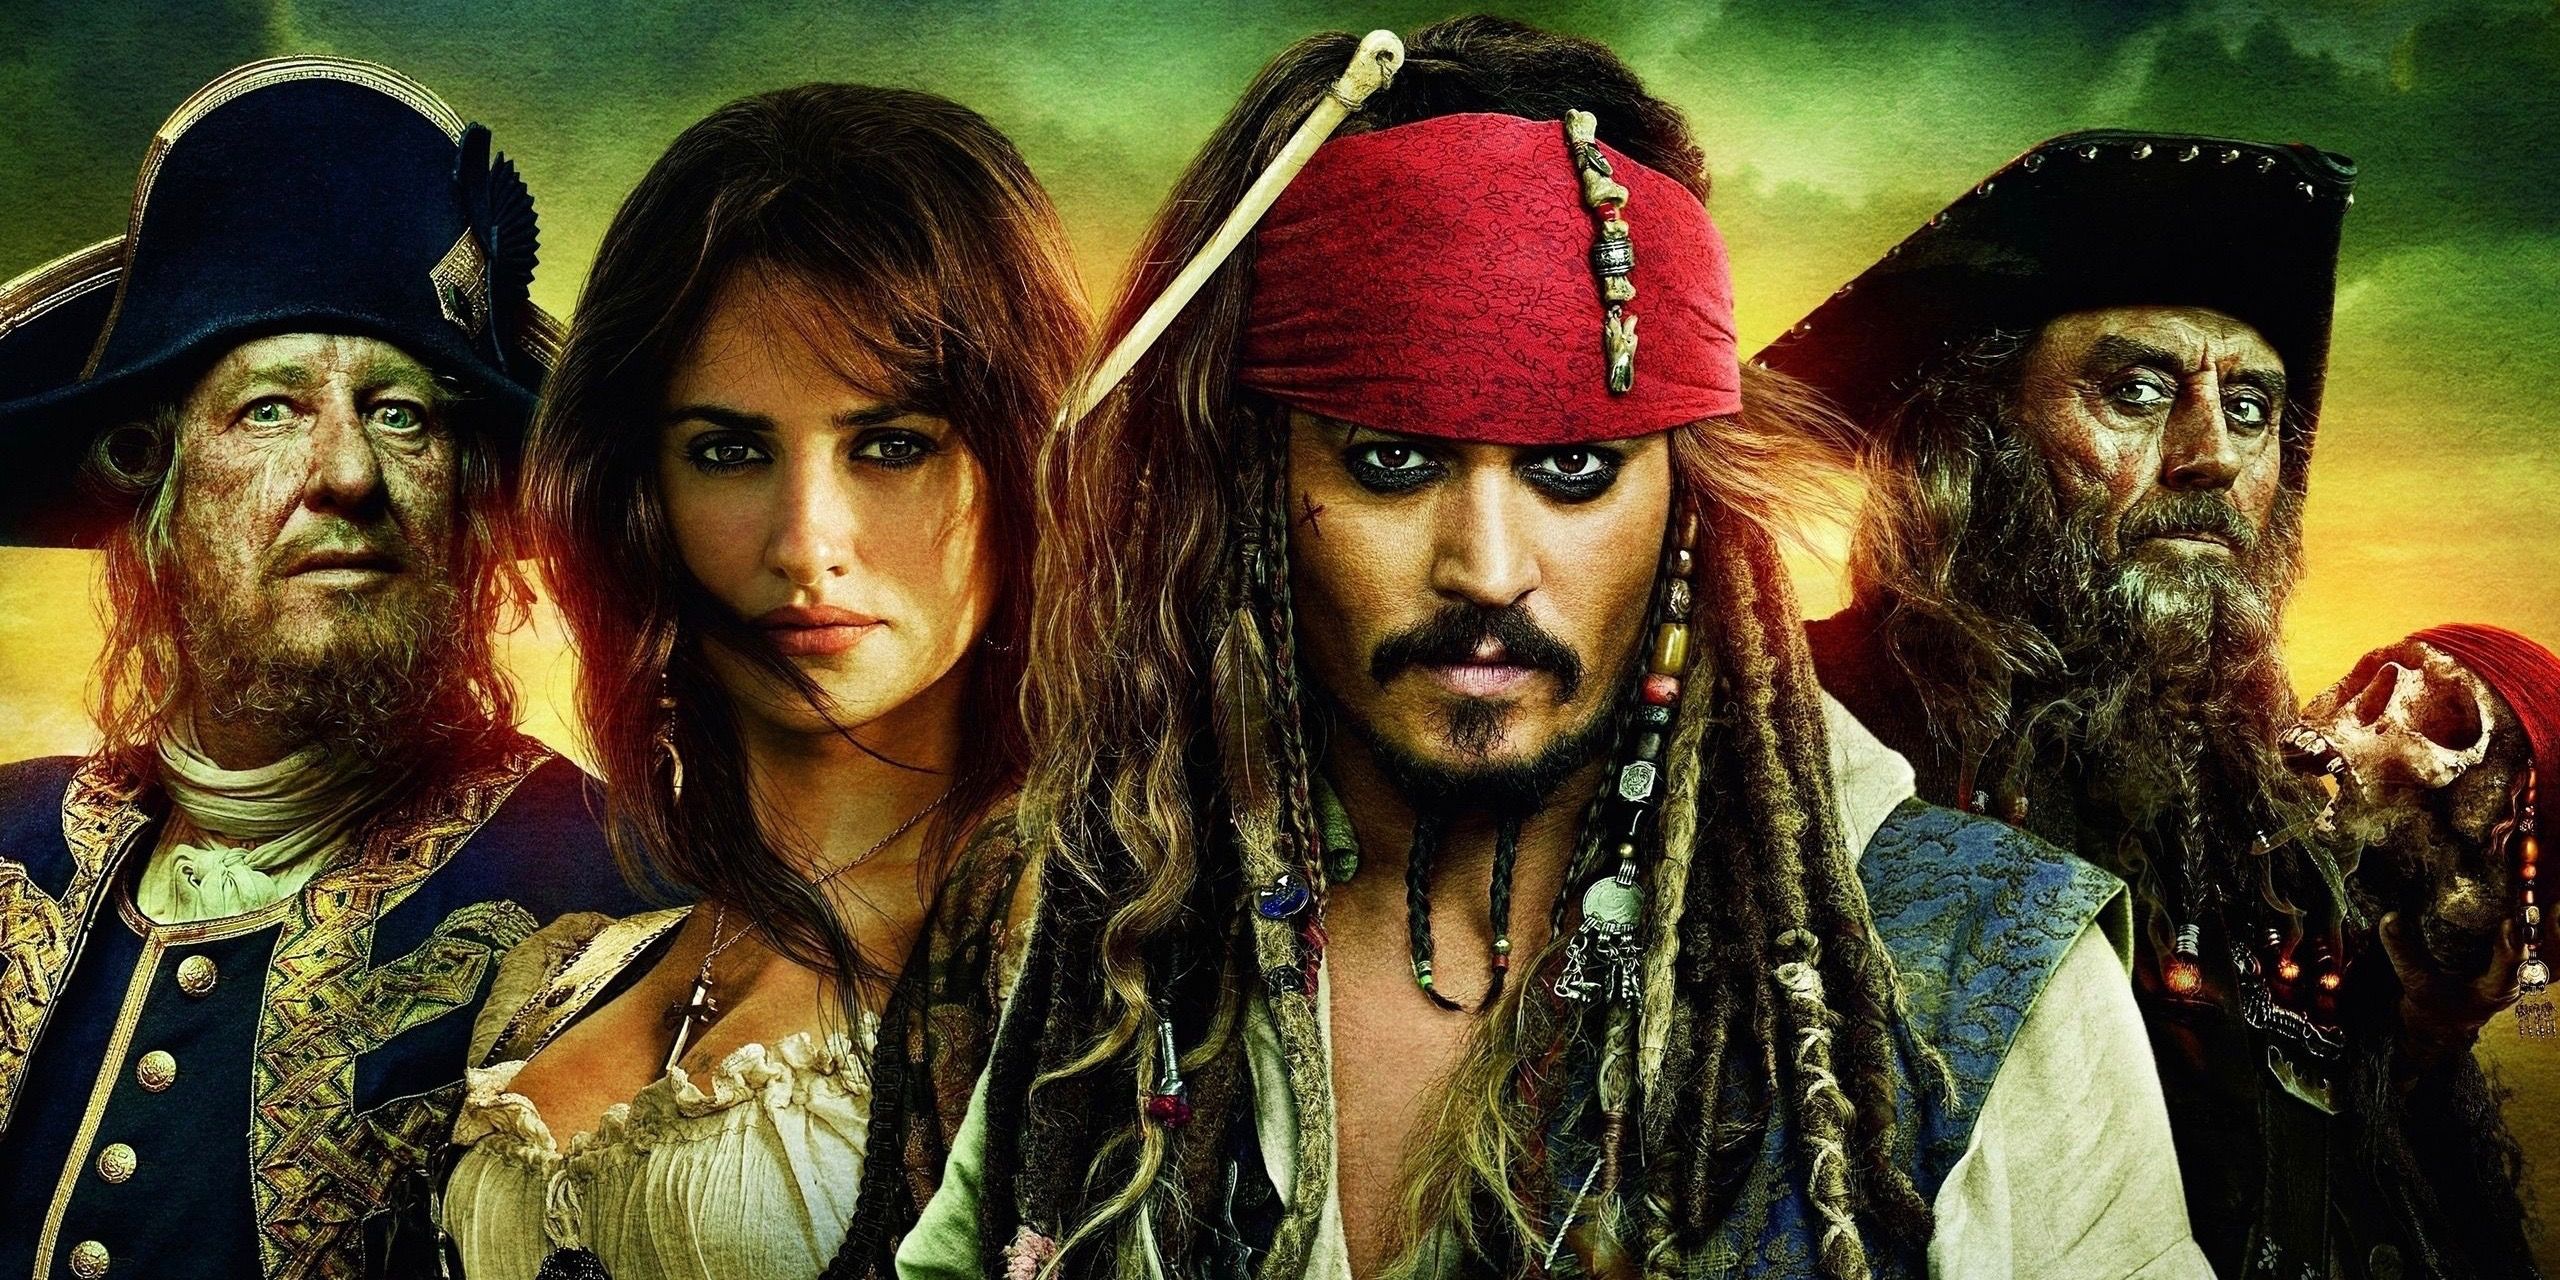 Jack Sparrow has finally returned, but fans aren't happy